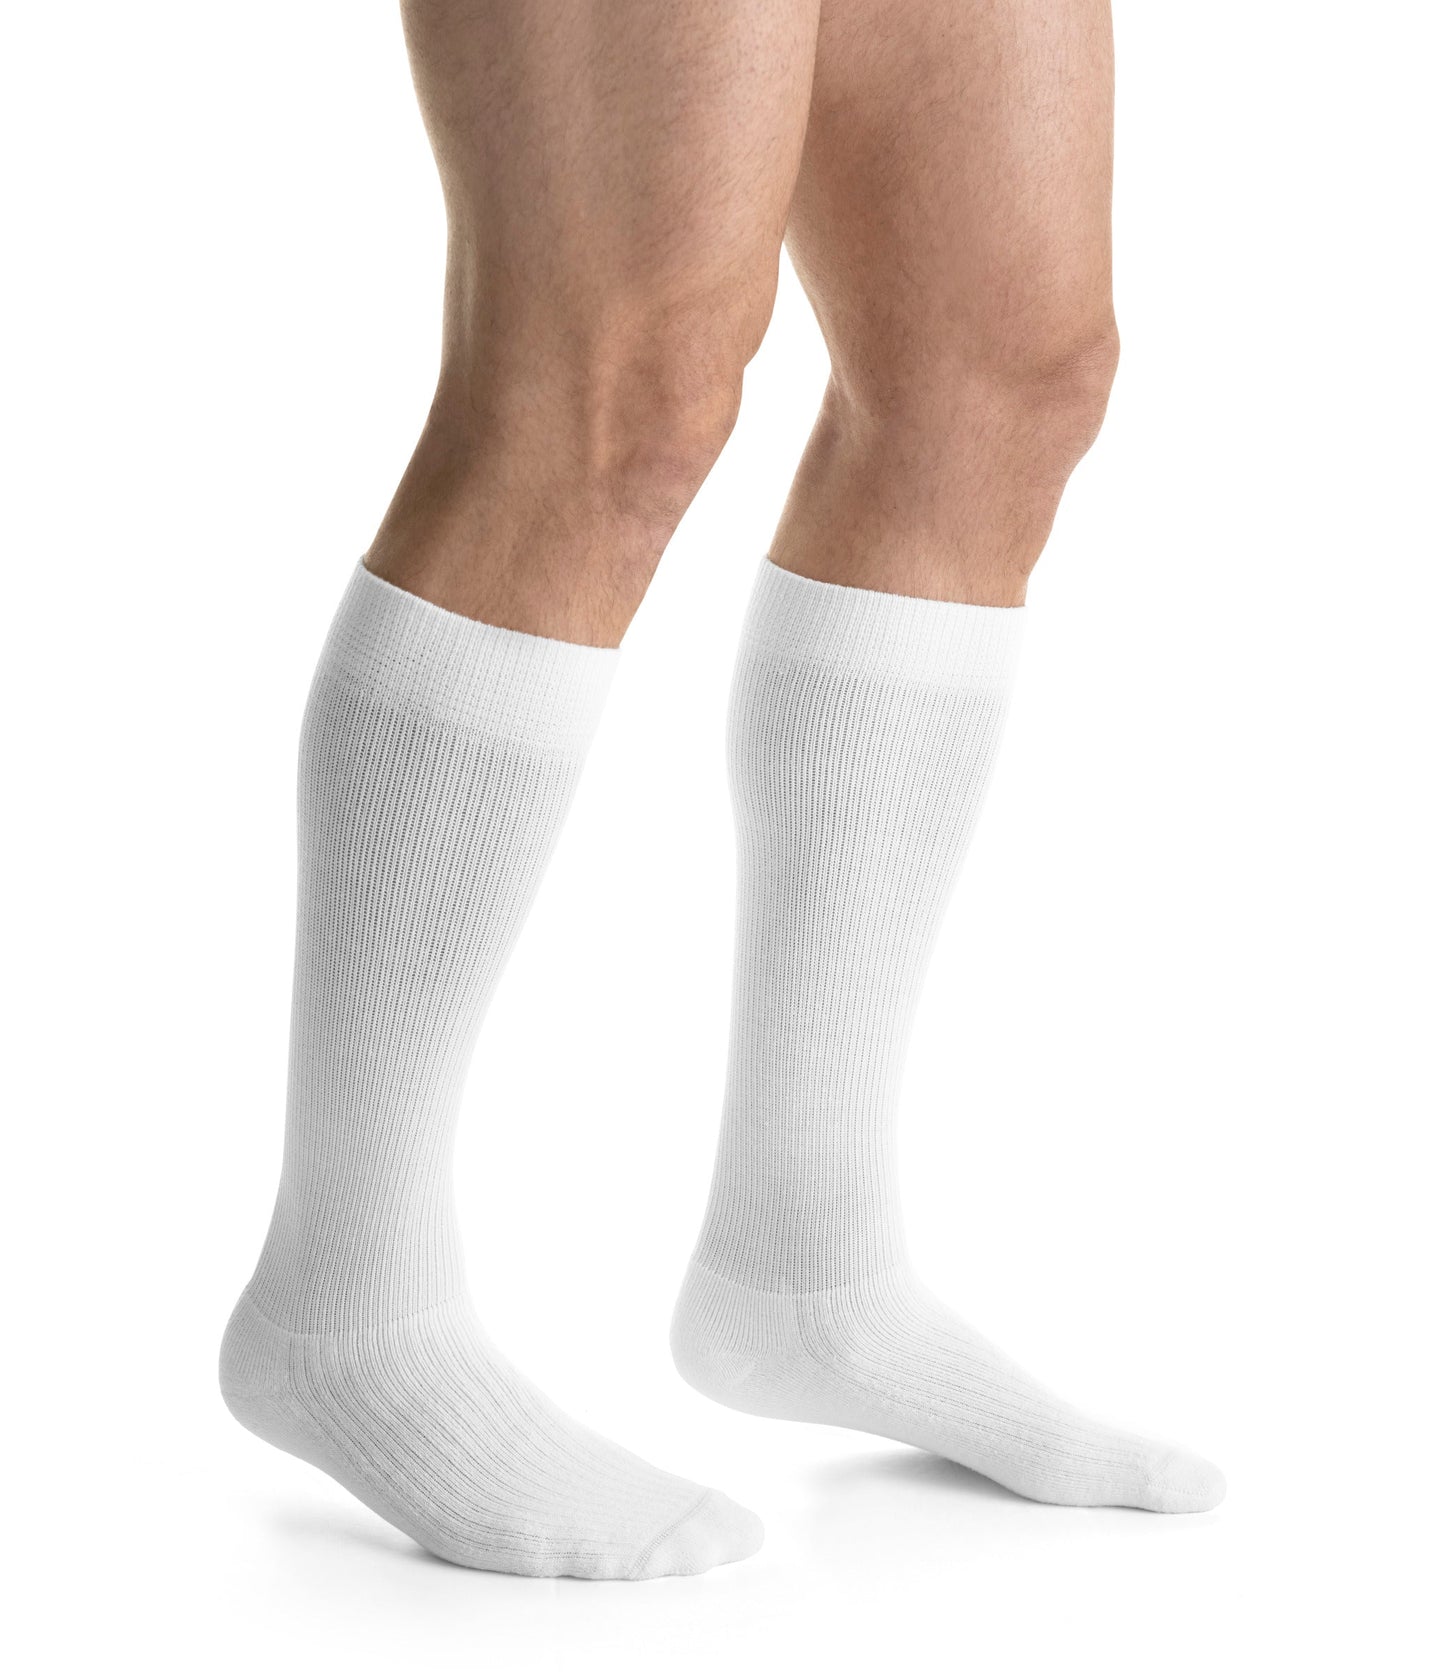 JOBST ActiveWear Compression Socks 20-30 mmHg, Knee High, Closed Toe Full Calf